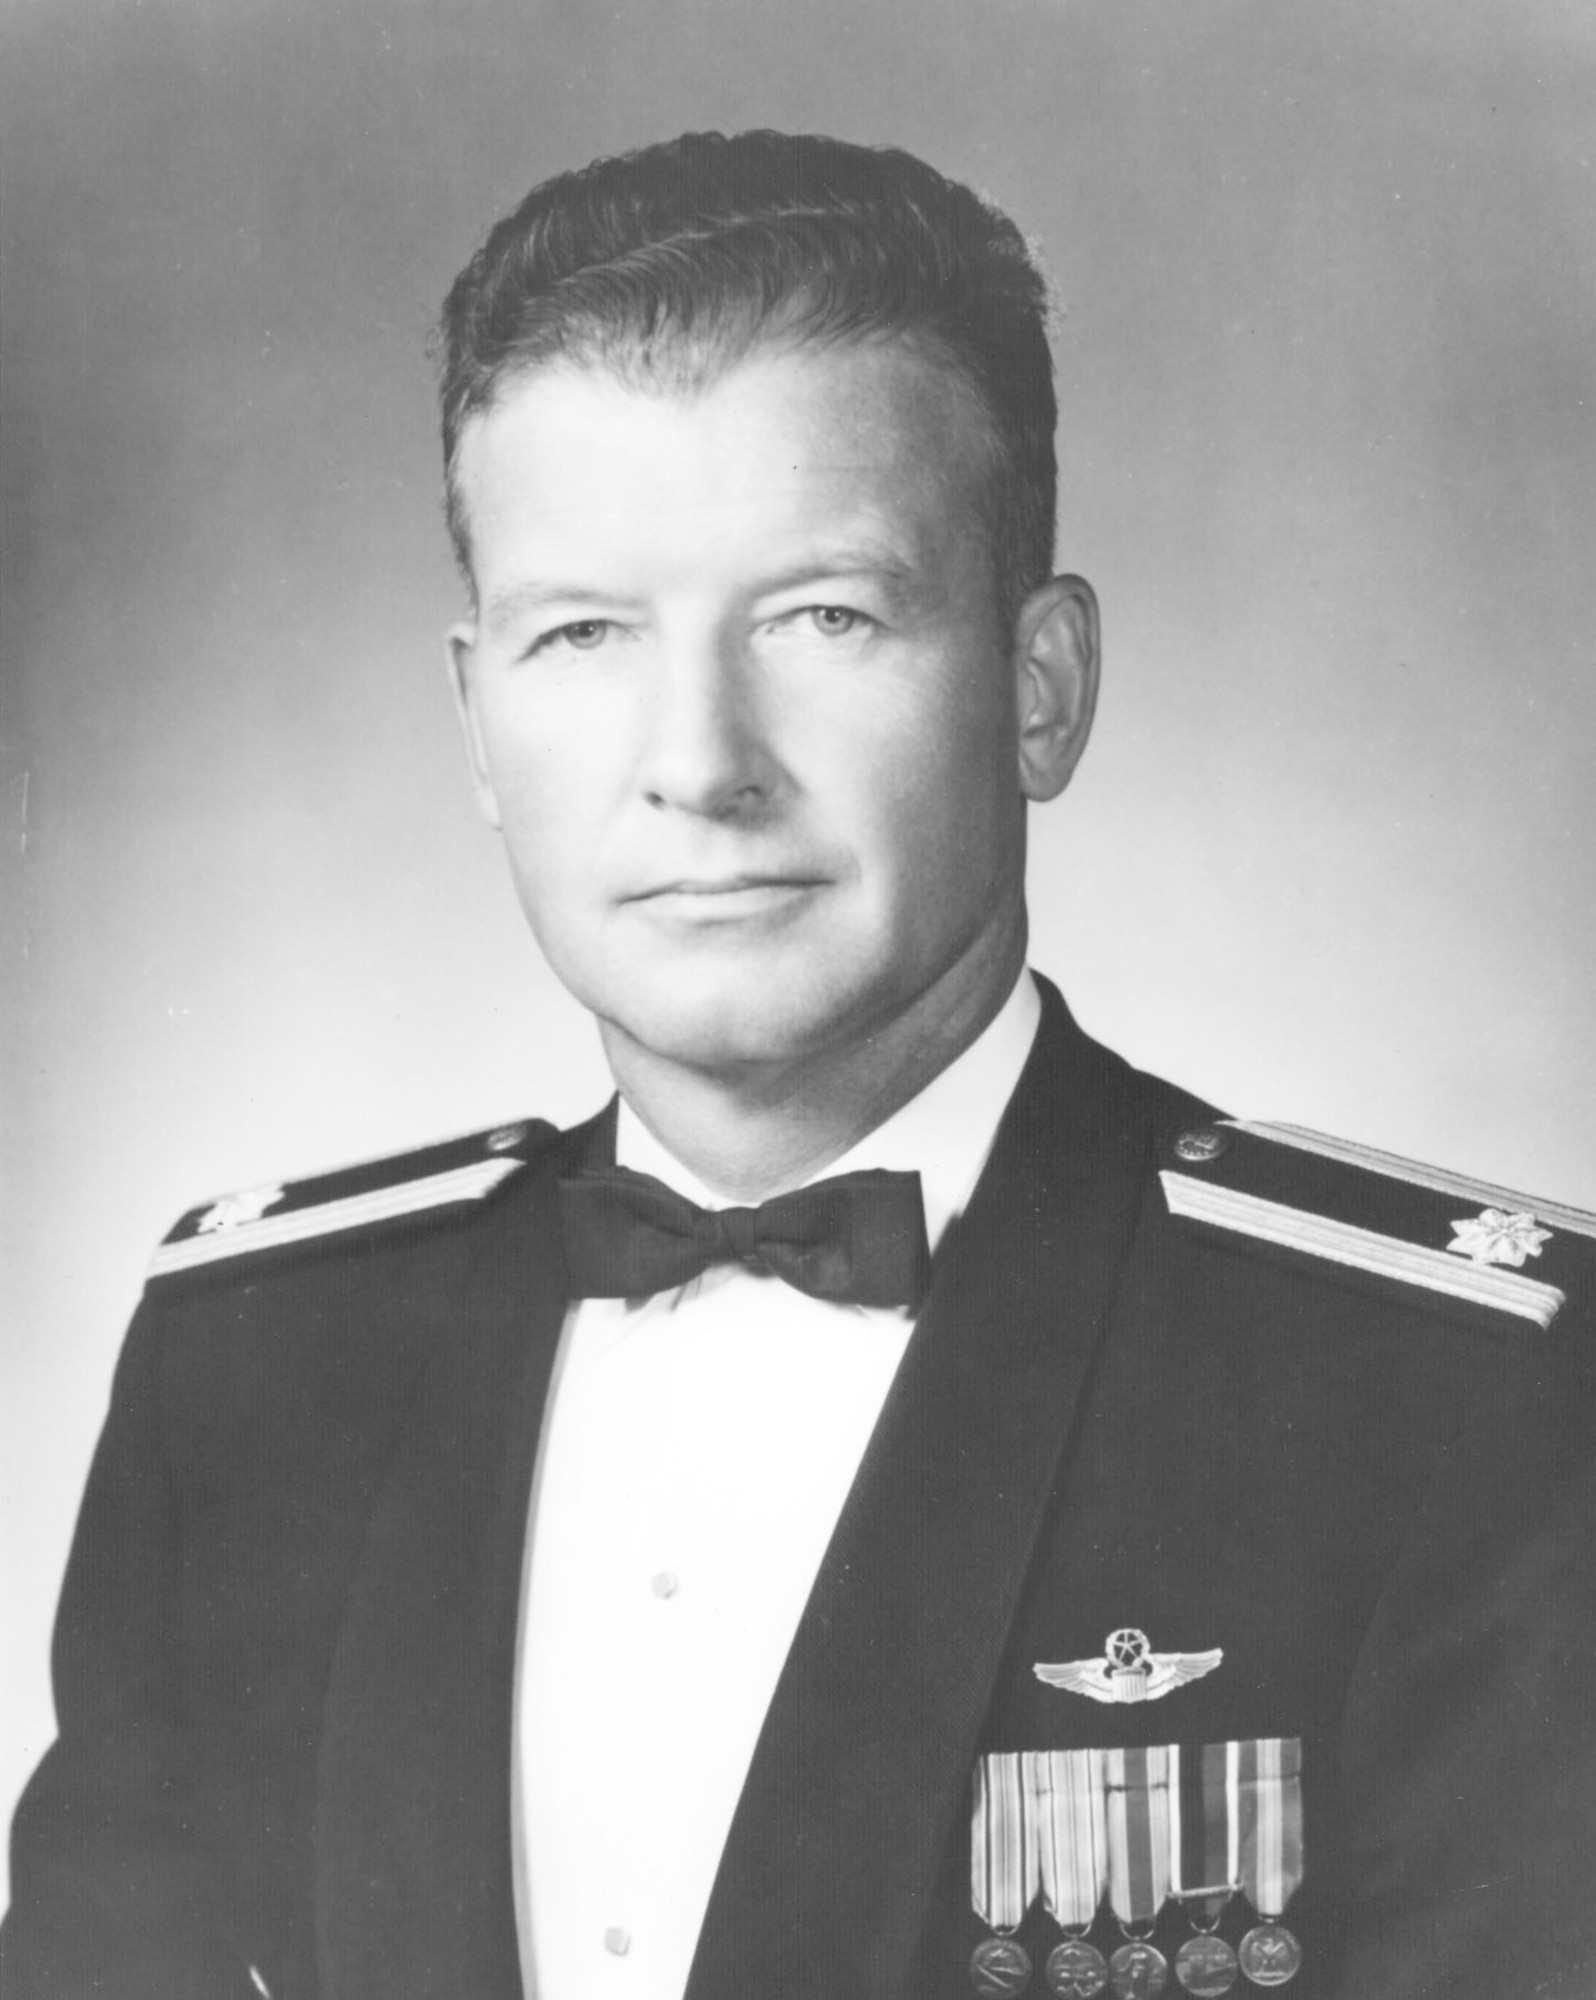 Medal of Honor recipient, Vietnam